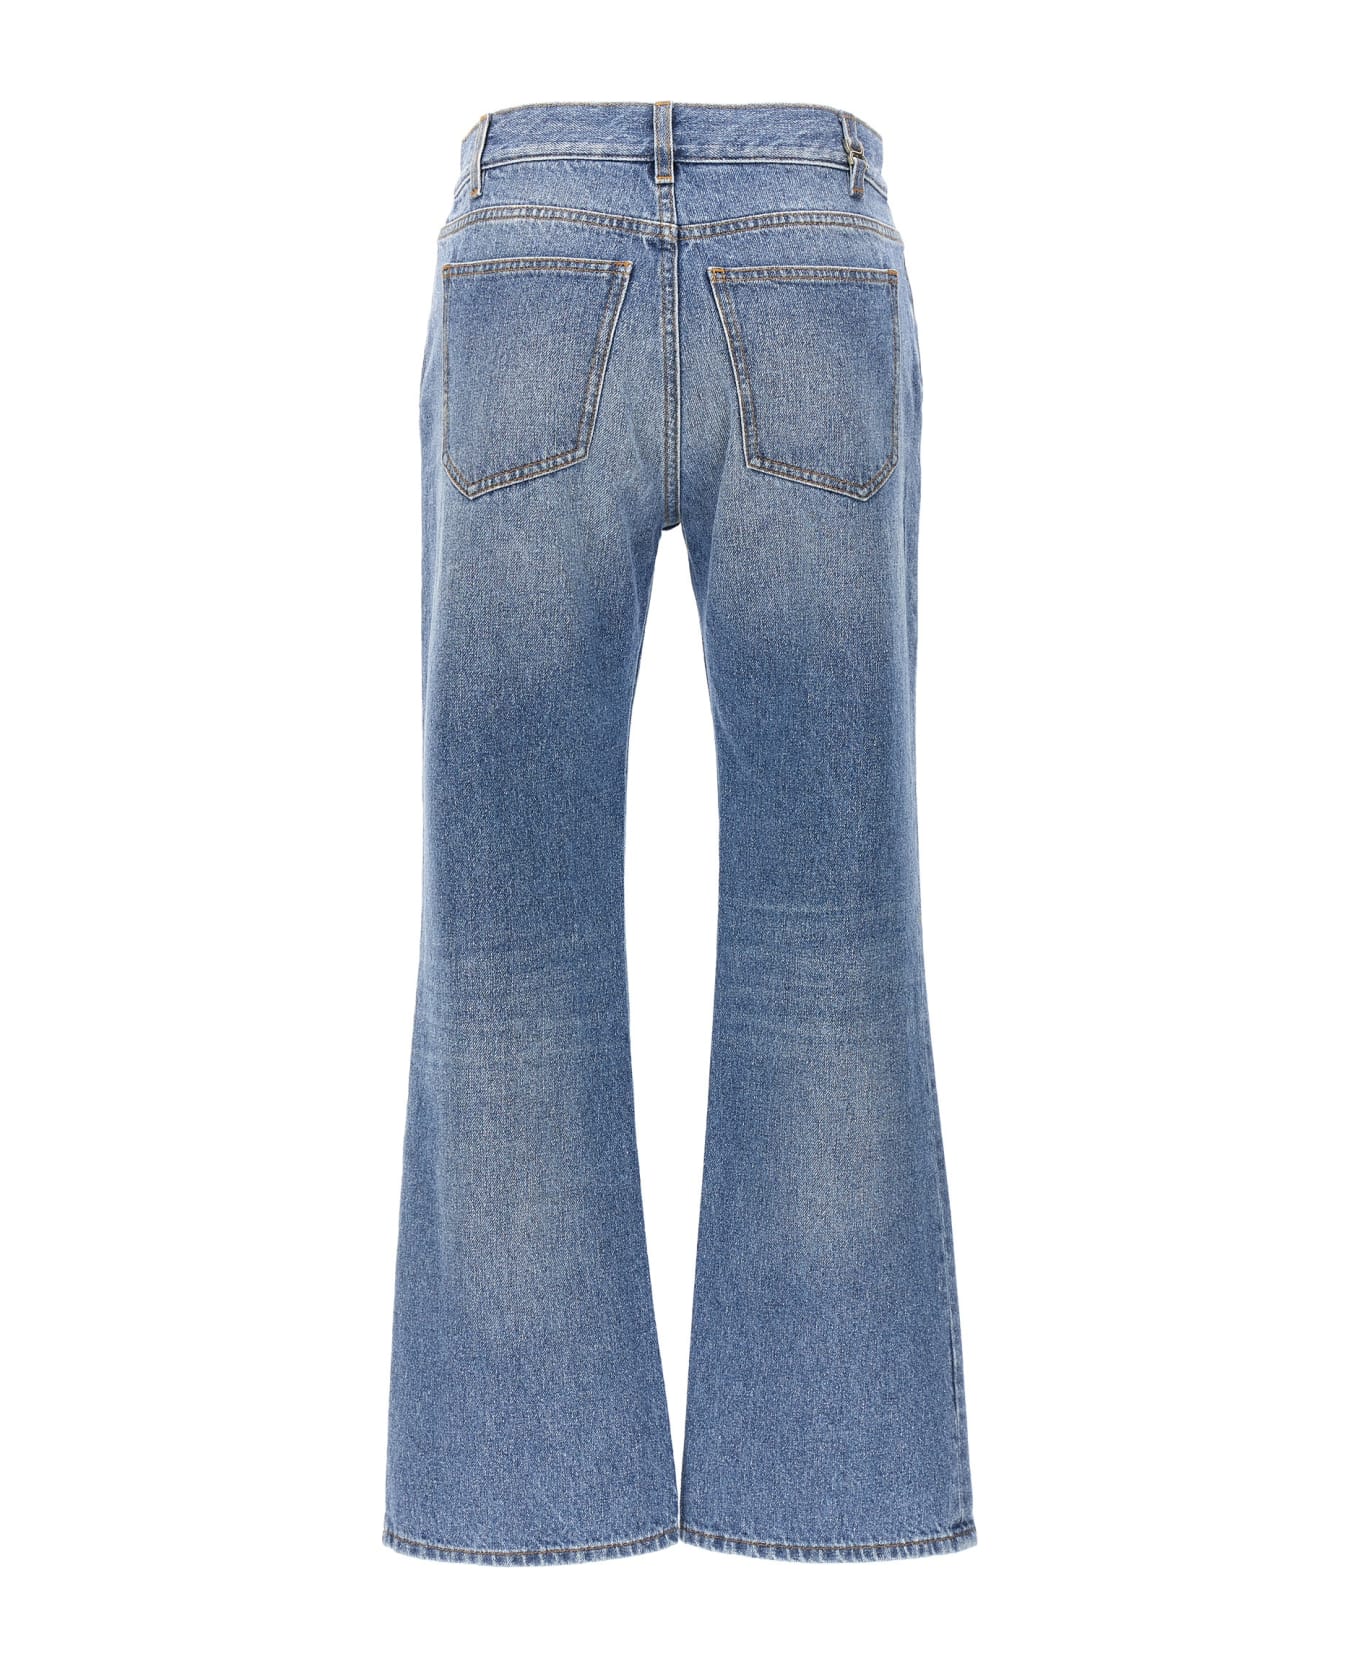 Chloé Denim Cropped Cut Jeans - Light Blue デニム